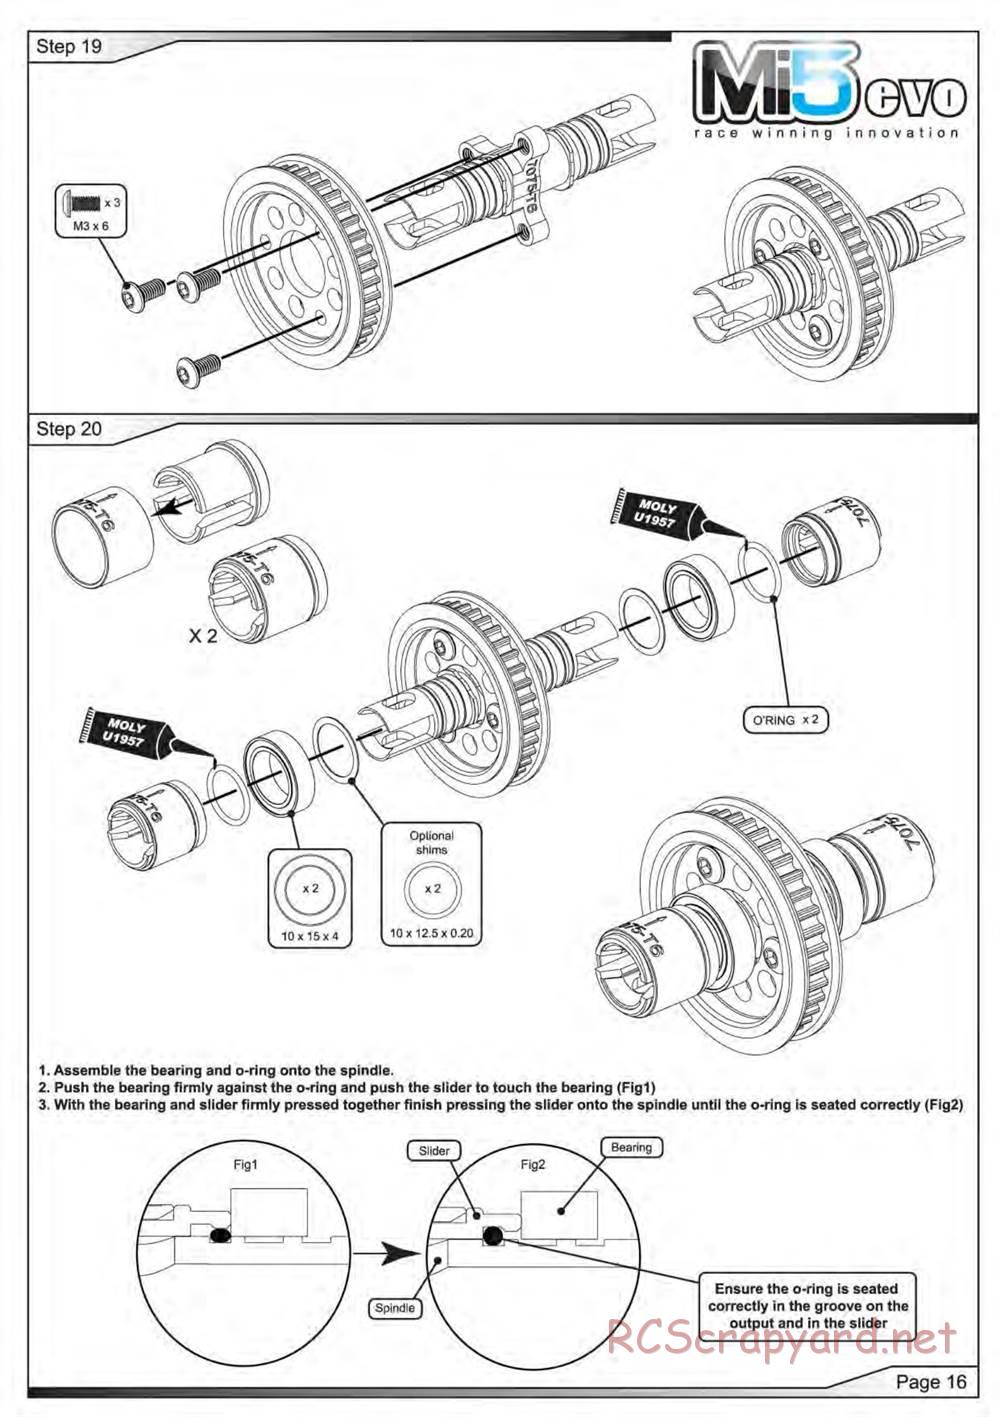 Schumacher - Mi5 Evo - Manual - Page 17